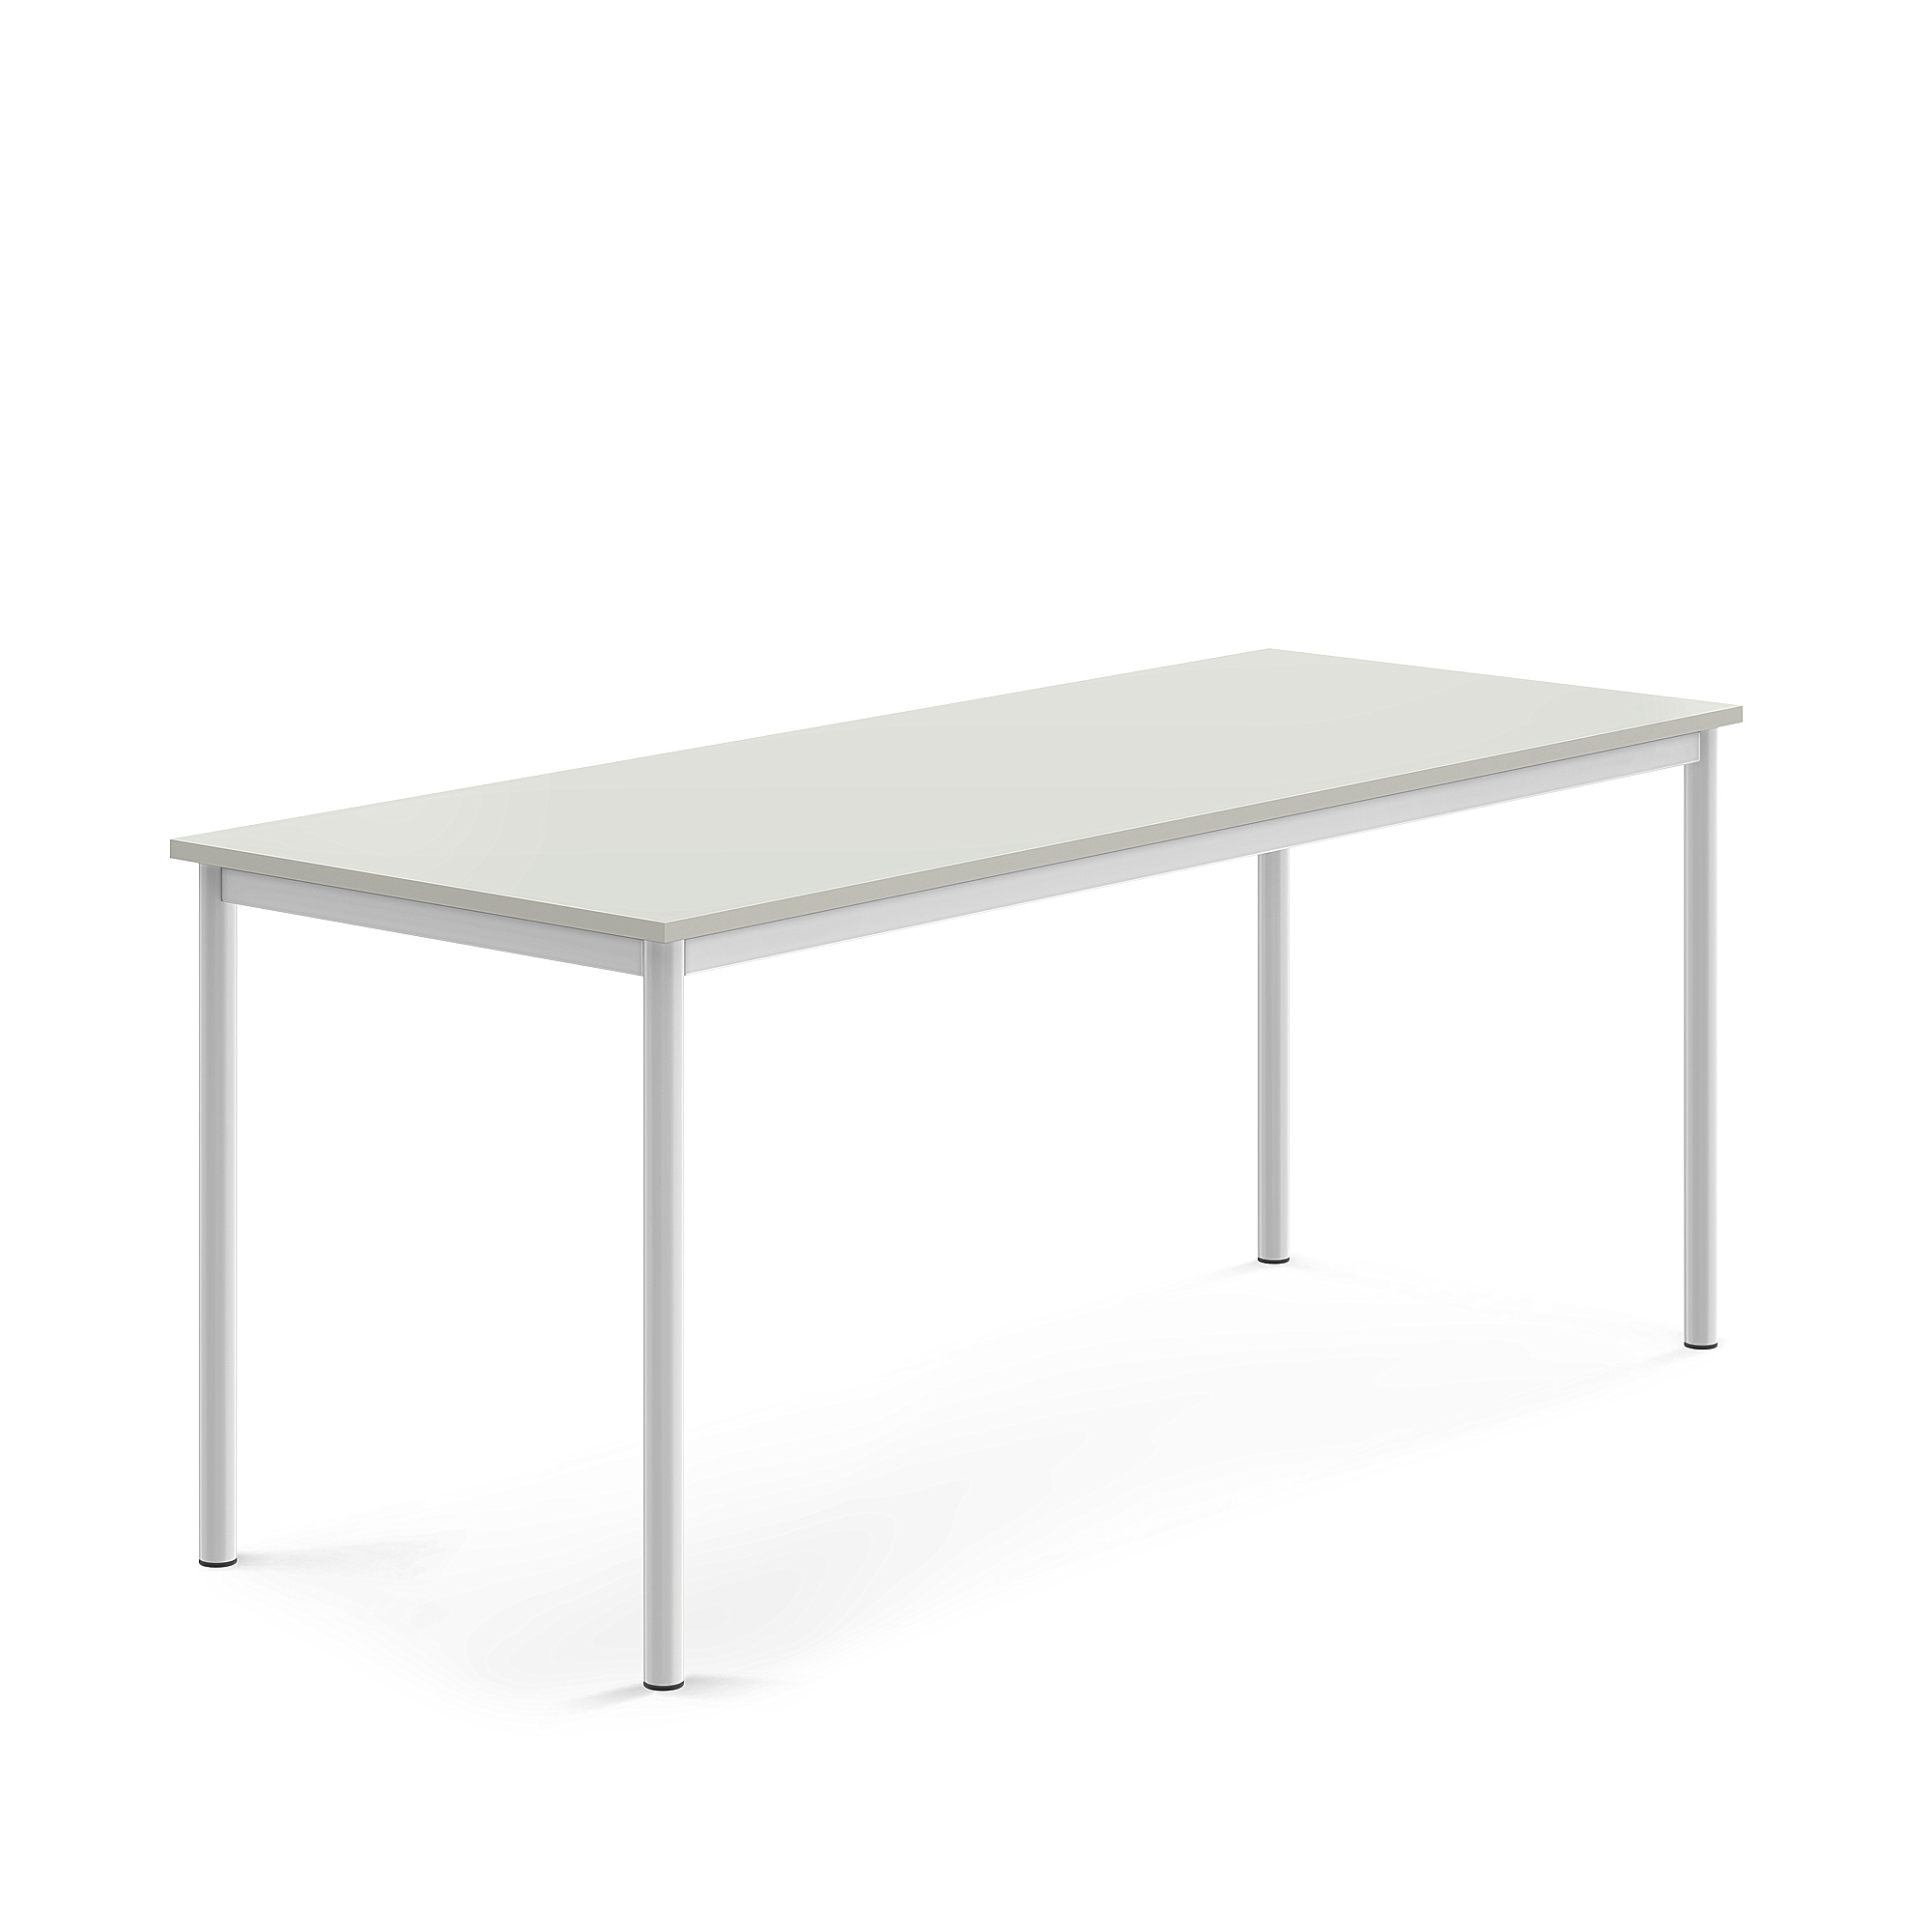 Stůl SONITUS, 1800x700x720 mm, bílé nohy, HPL deska tlumící hluk, šedá